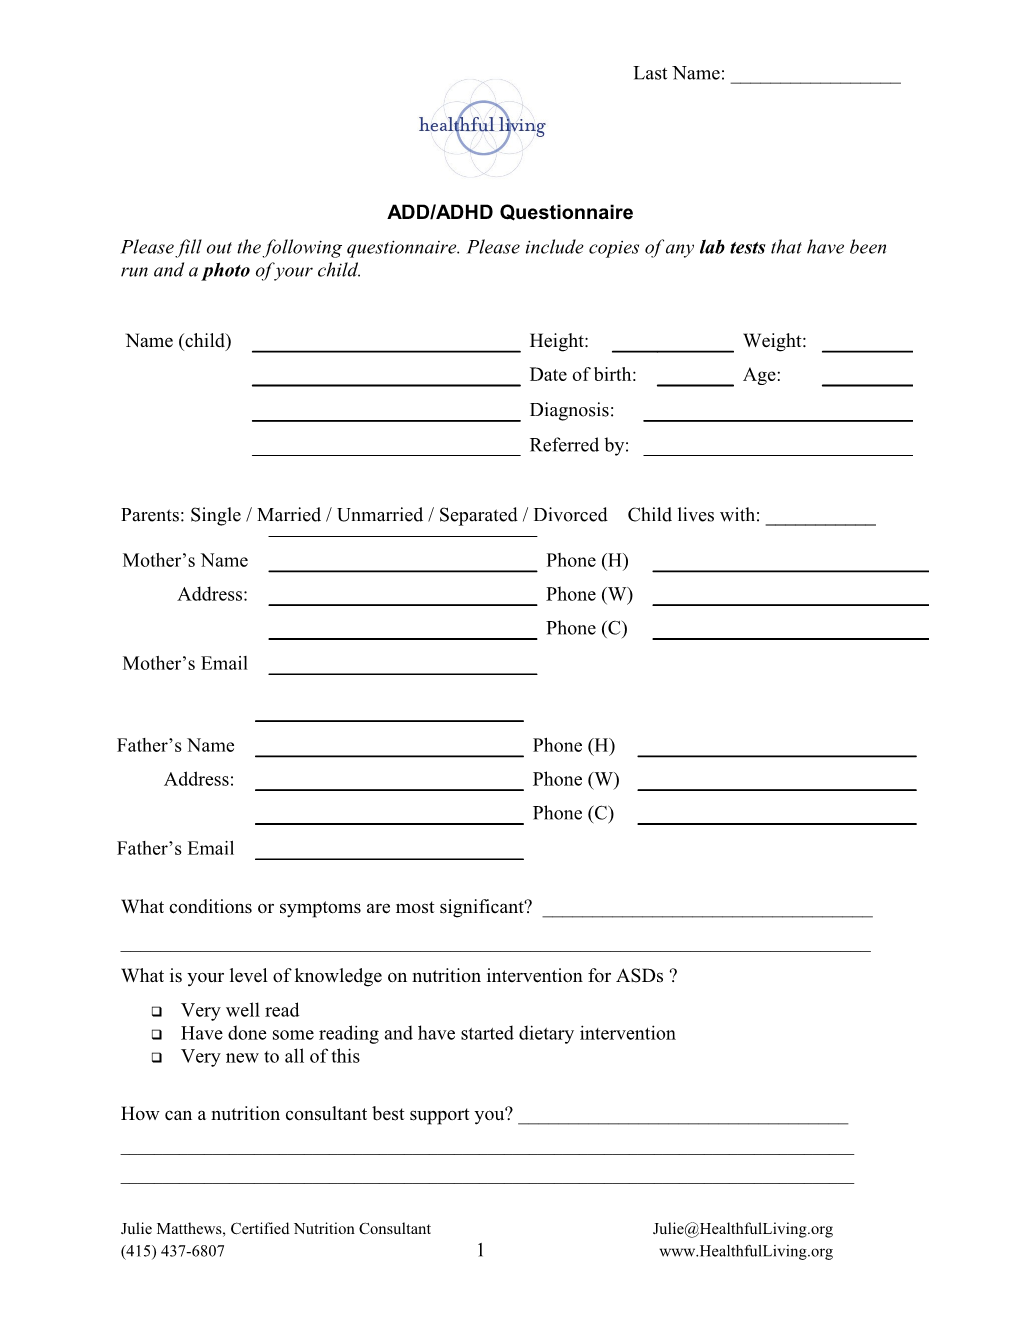 ADD/ADHD Questionnaire